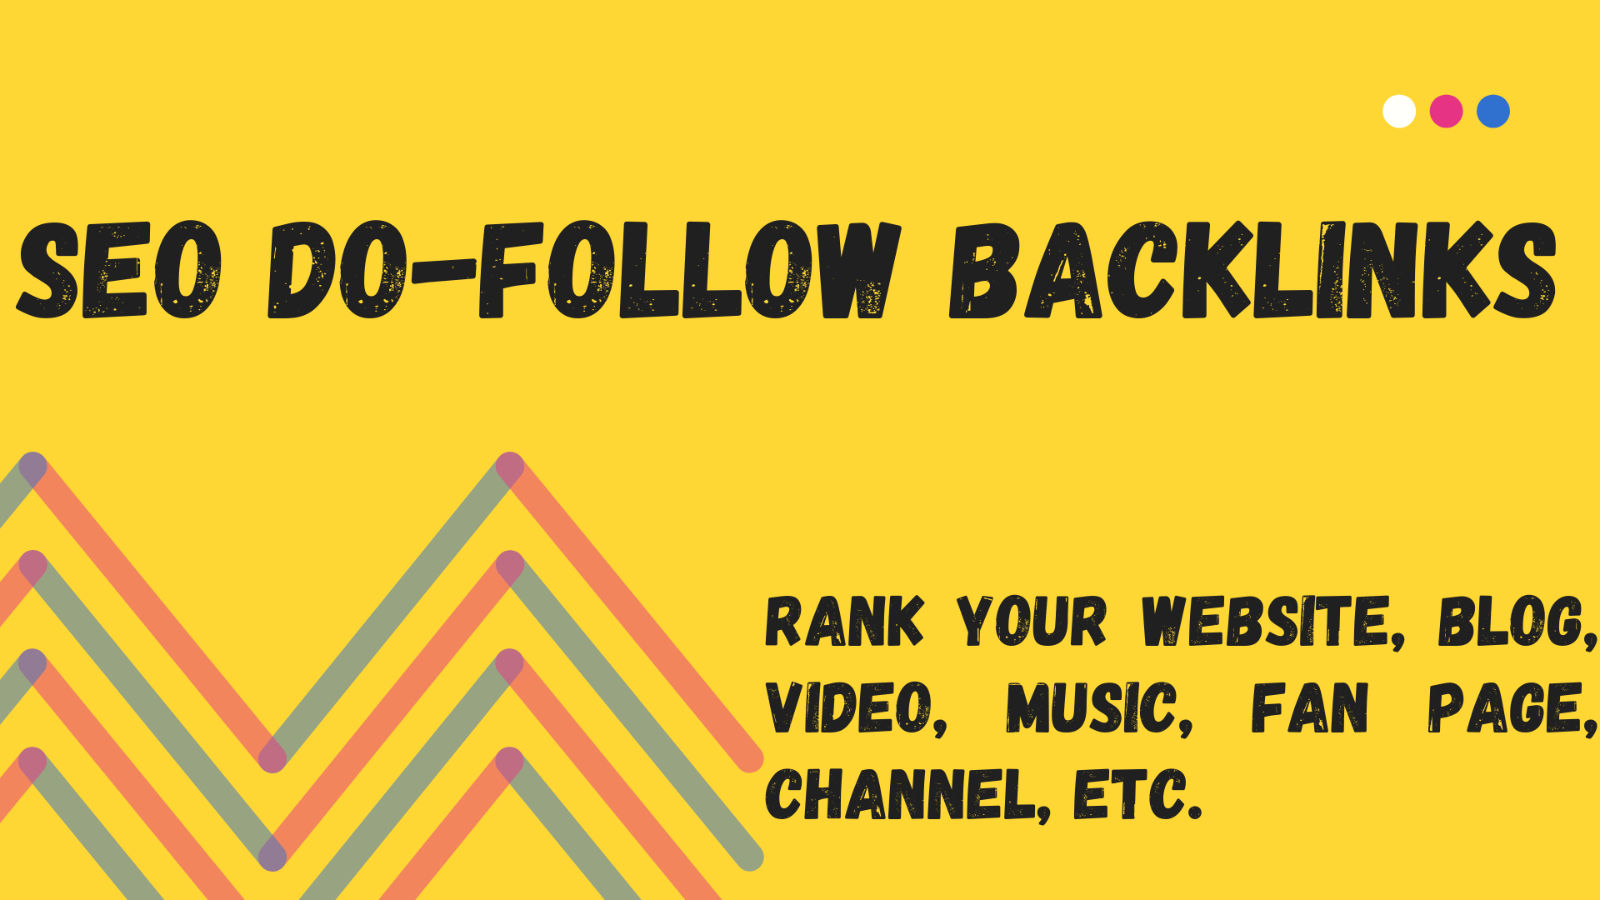 Rank on Google, Bing & Yahoo first page with SEO mix of Do-Follow Backlinks & Social Bookmarks+Bonus